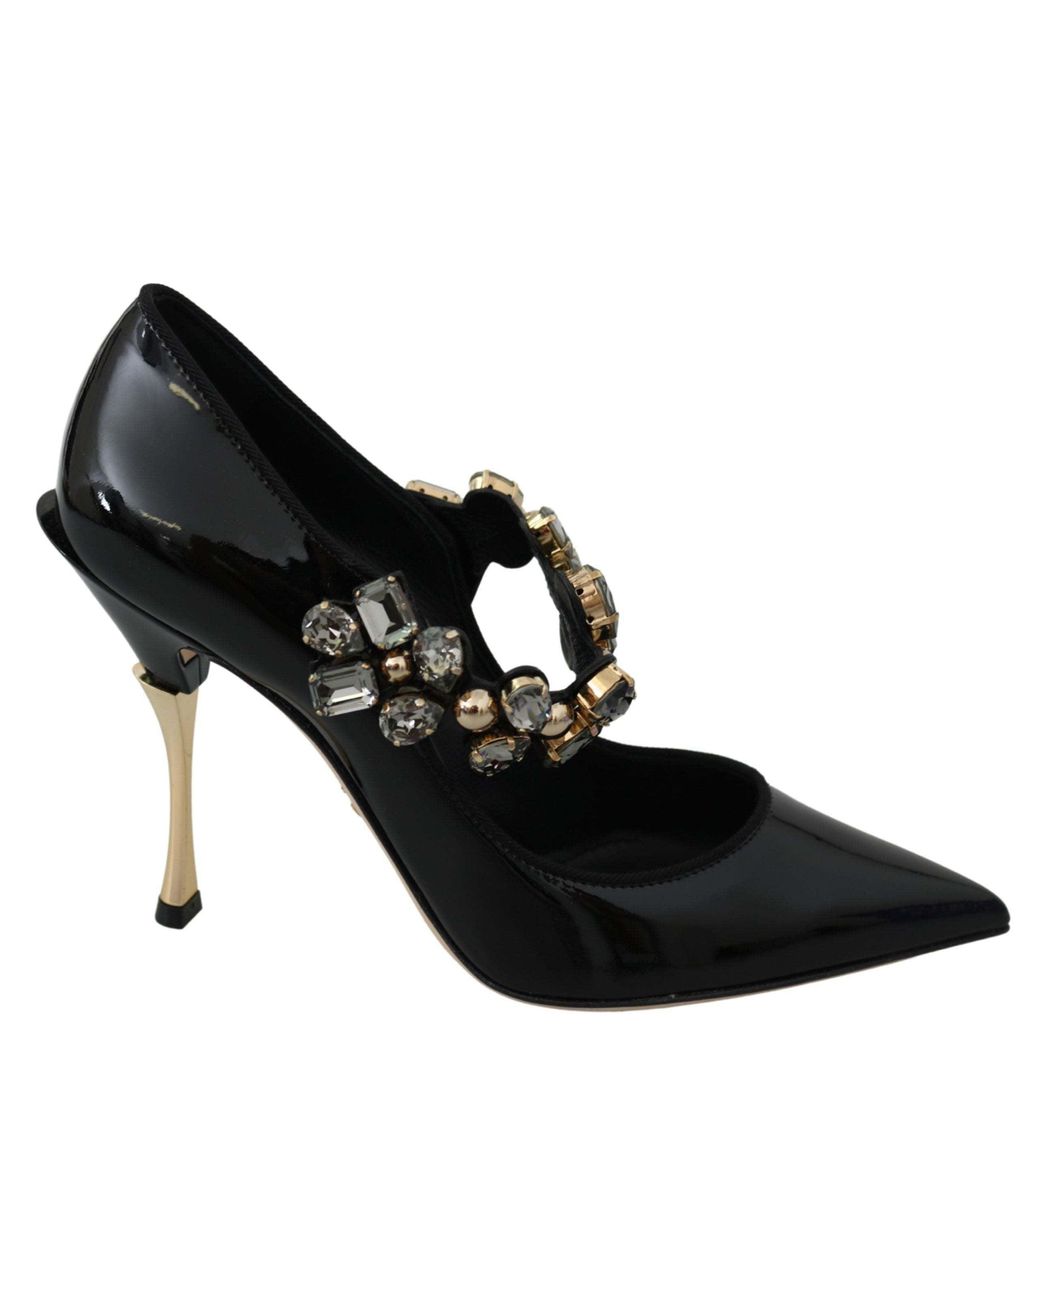 DOLCE & GABBANA Shoes Black Gold Leather Crystal Pumps EU38 US7.5 RRP $1300